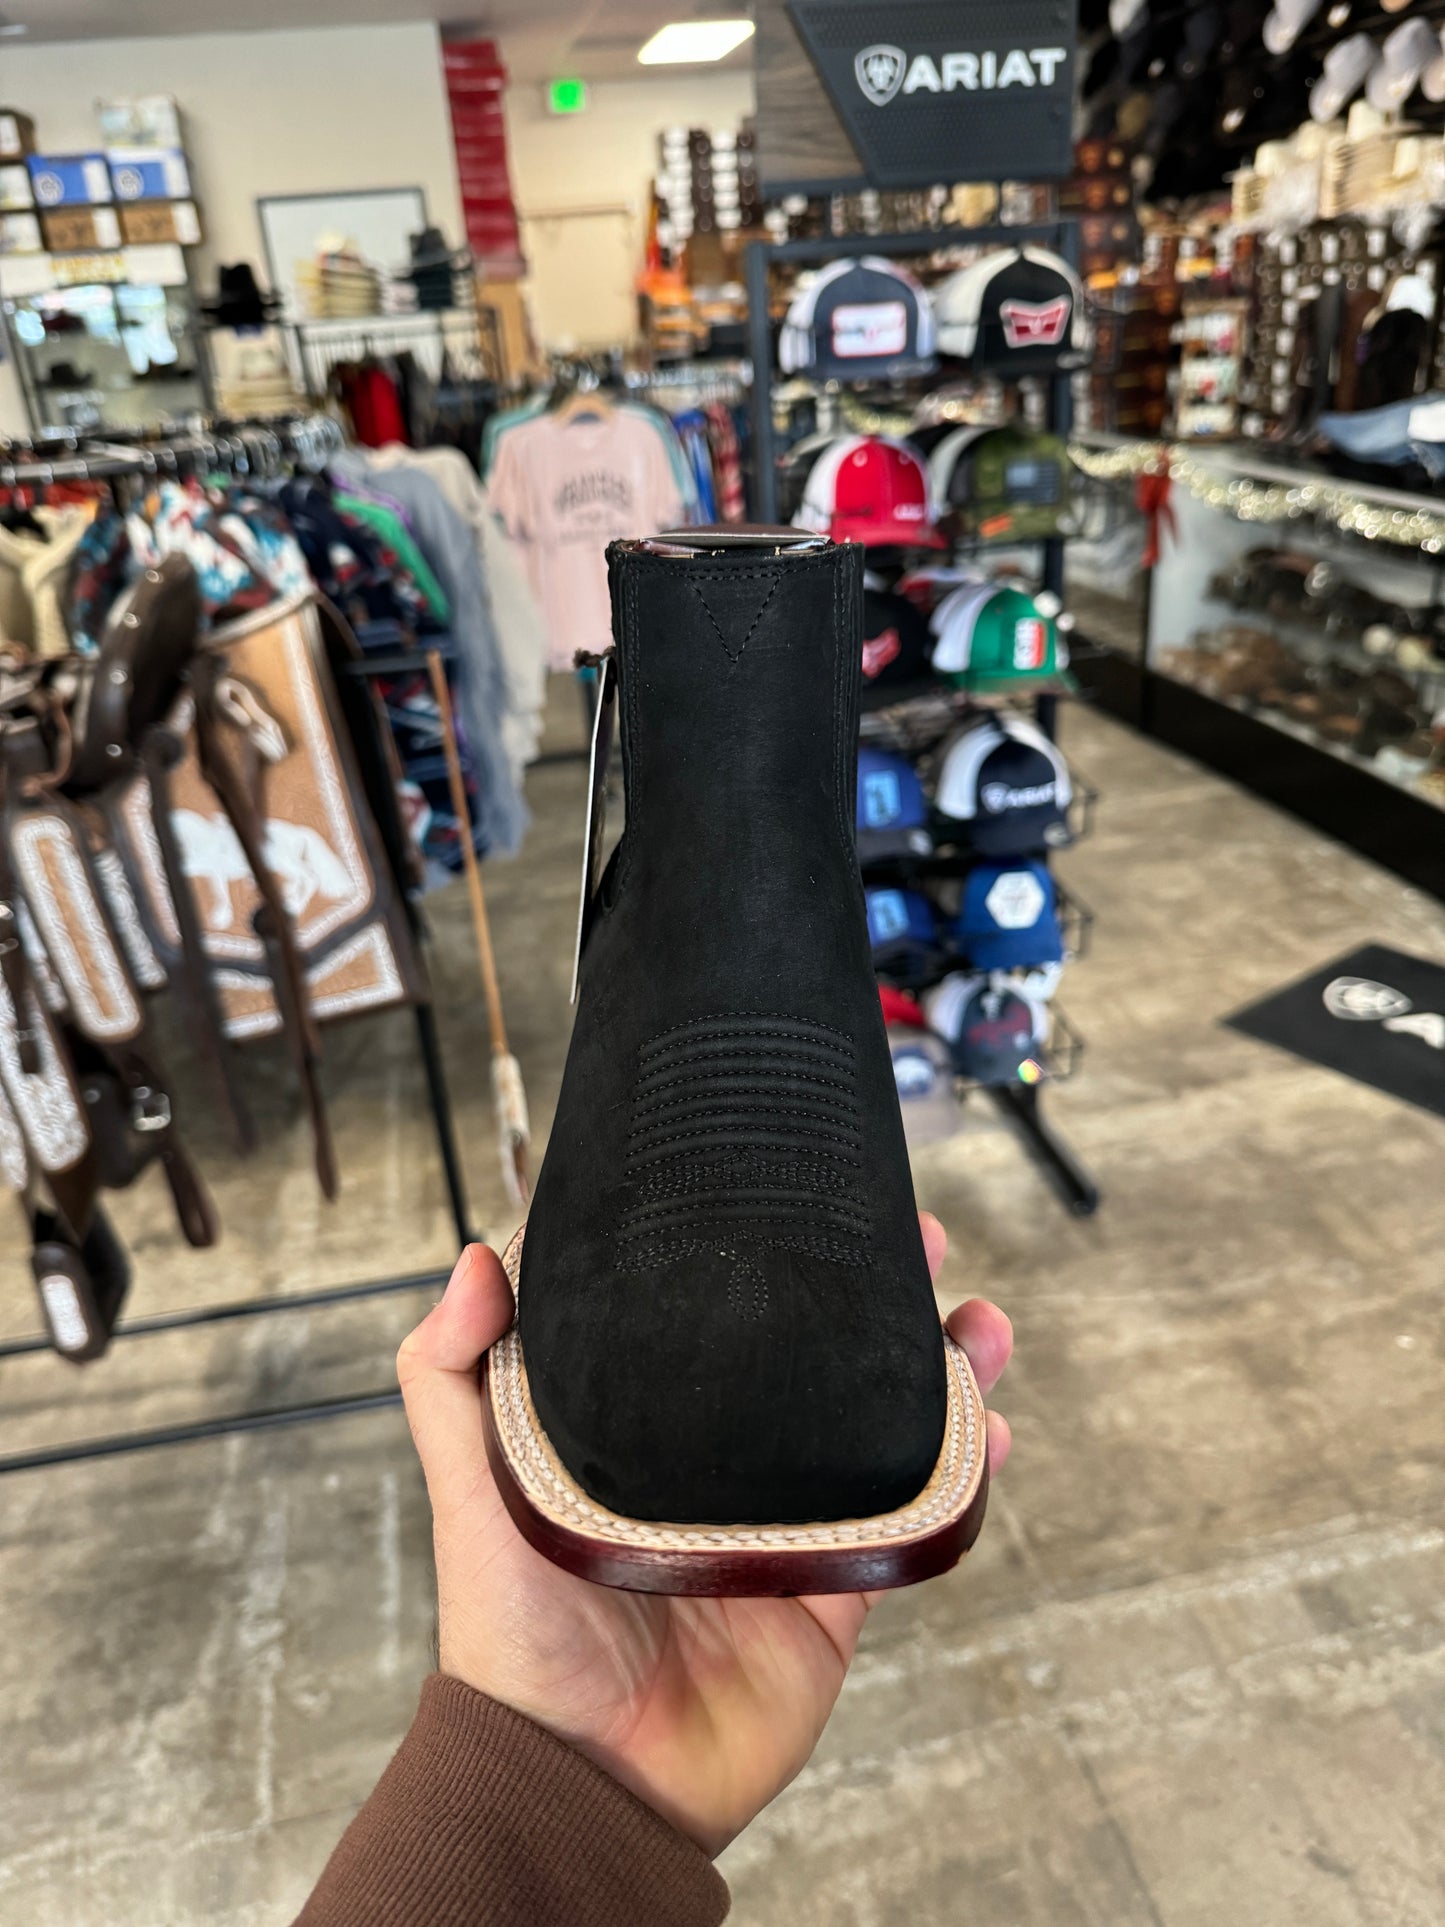 Men's Botin Los Altos Boots Nobuck Black Wide Square Toe